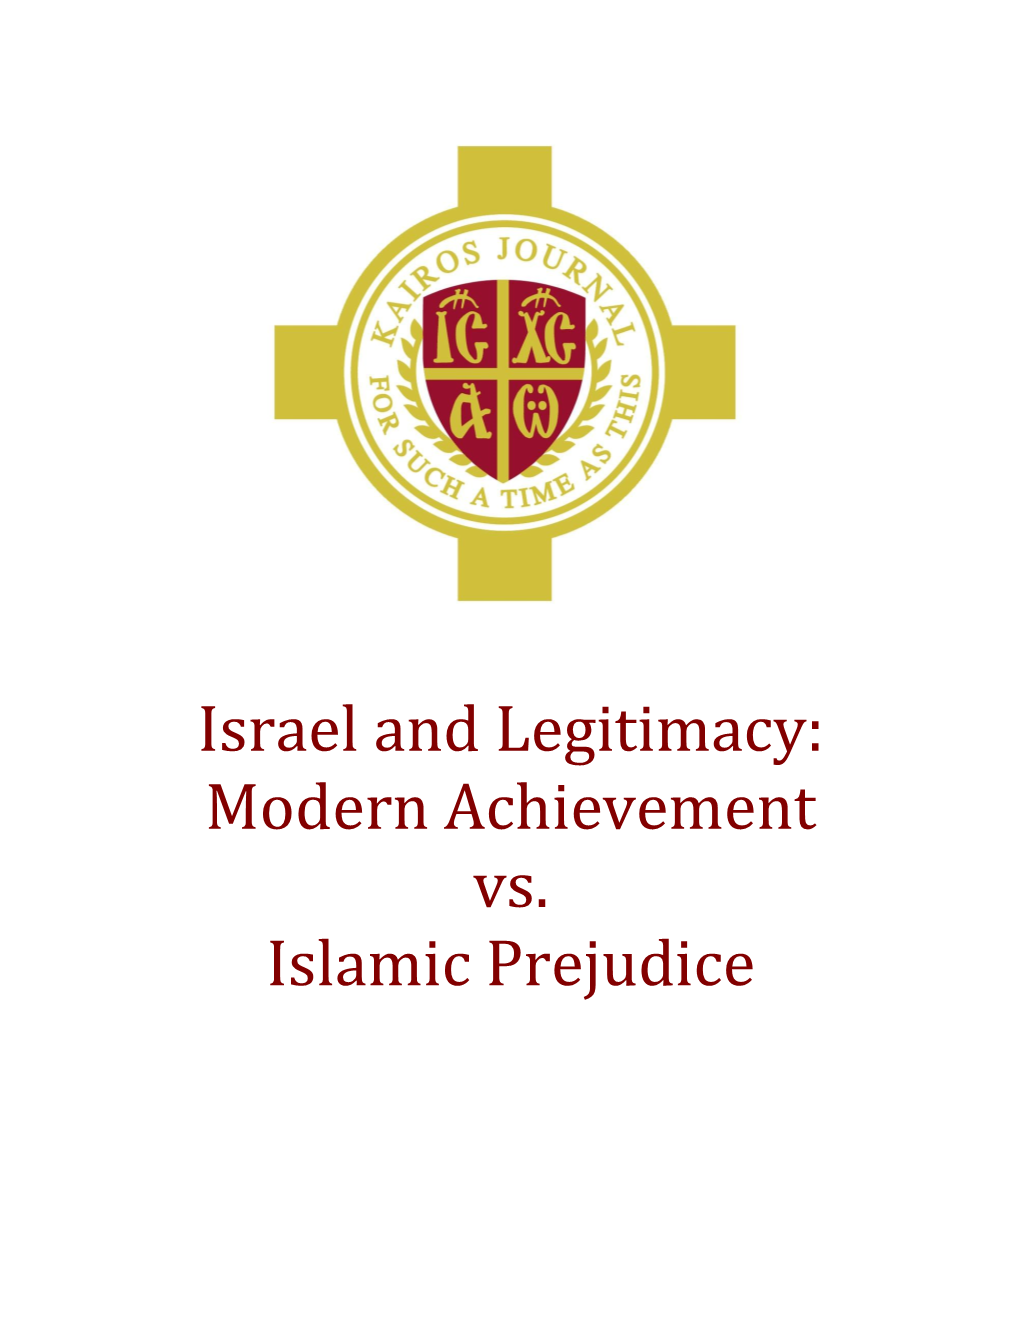 Israel and Legitimacy: Modern Achievement Vs